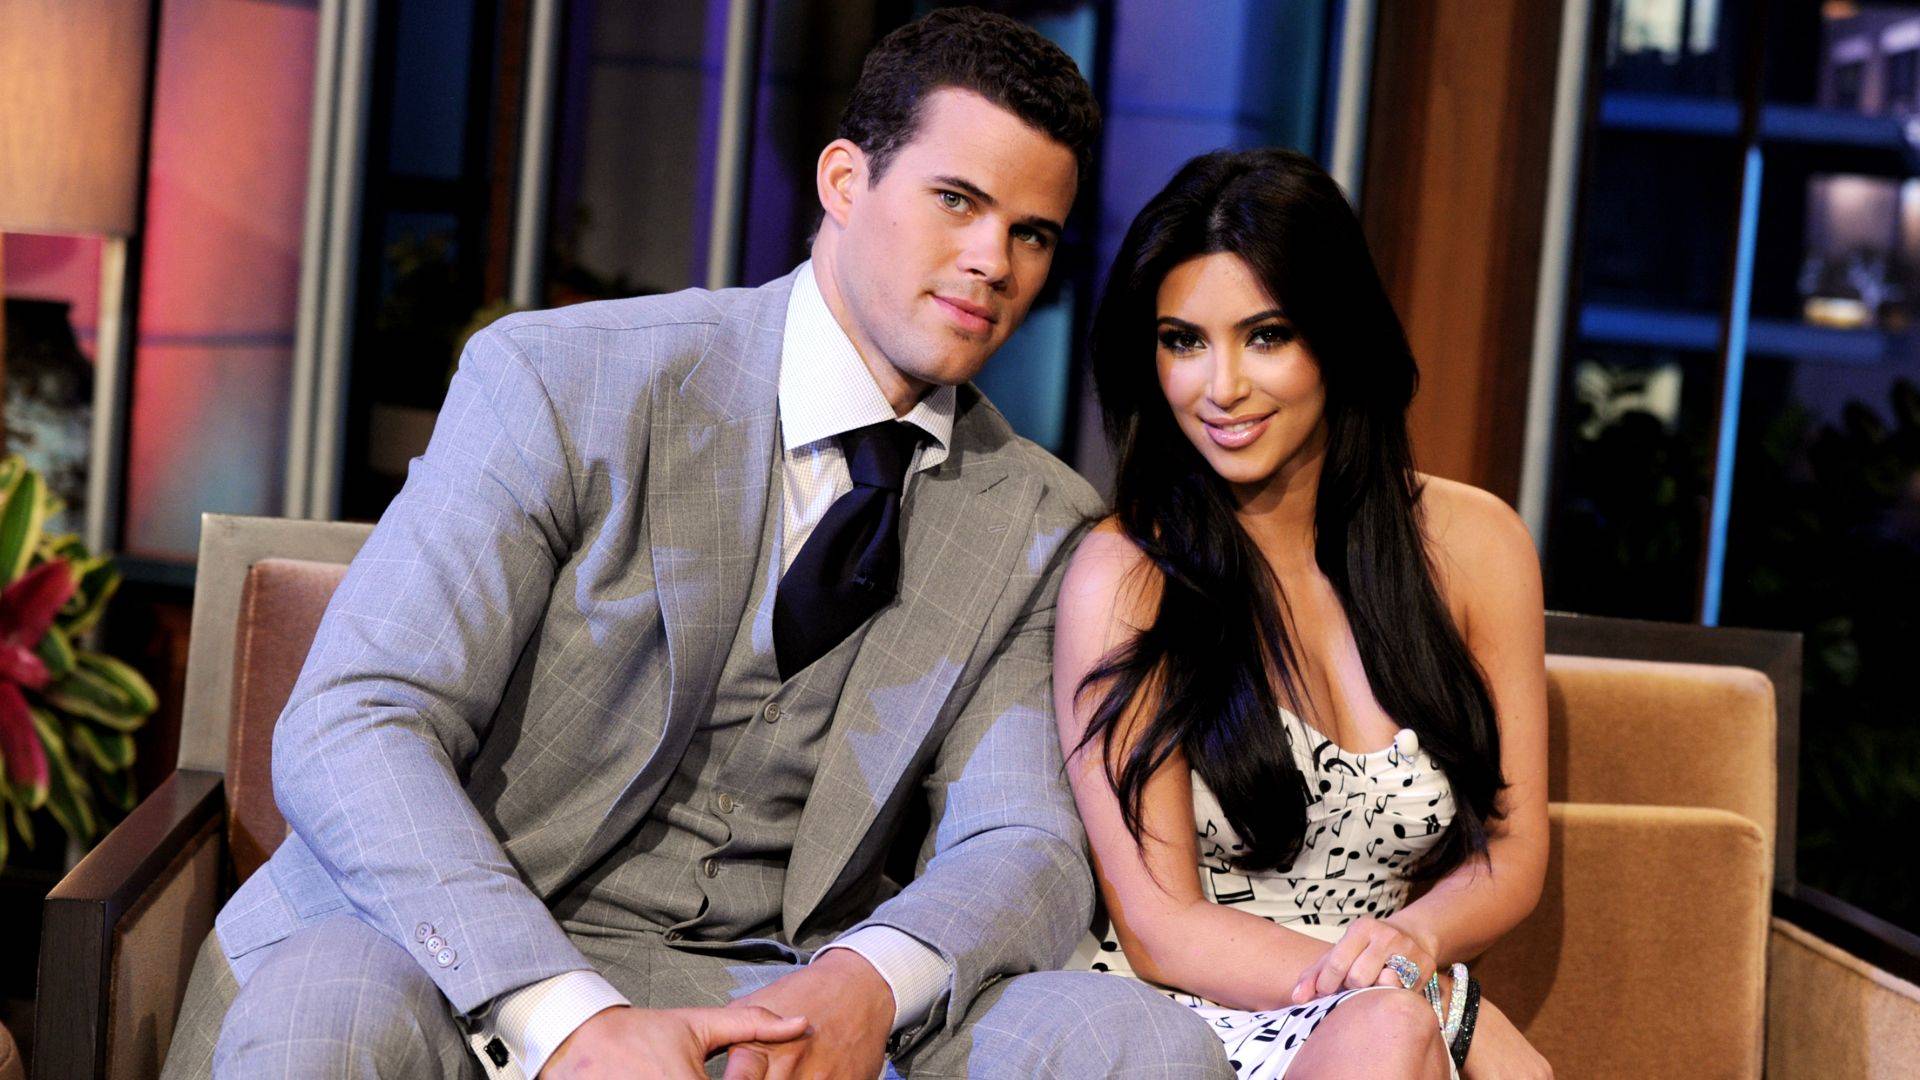 Kim Kardashian Kris Humphries together on panel smiling before split and divorce